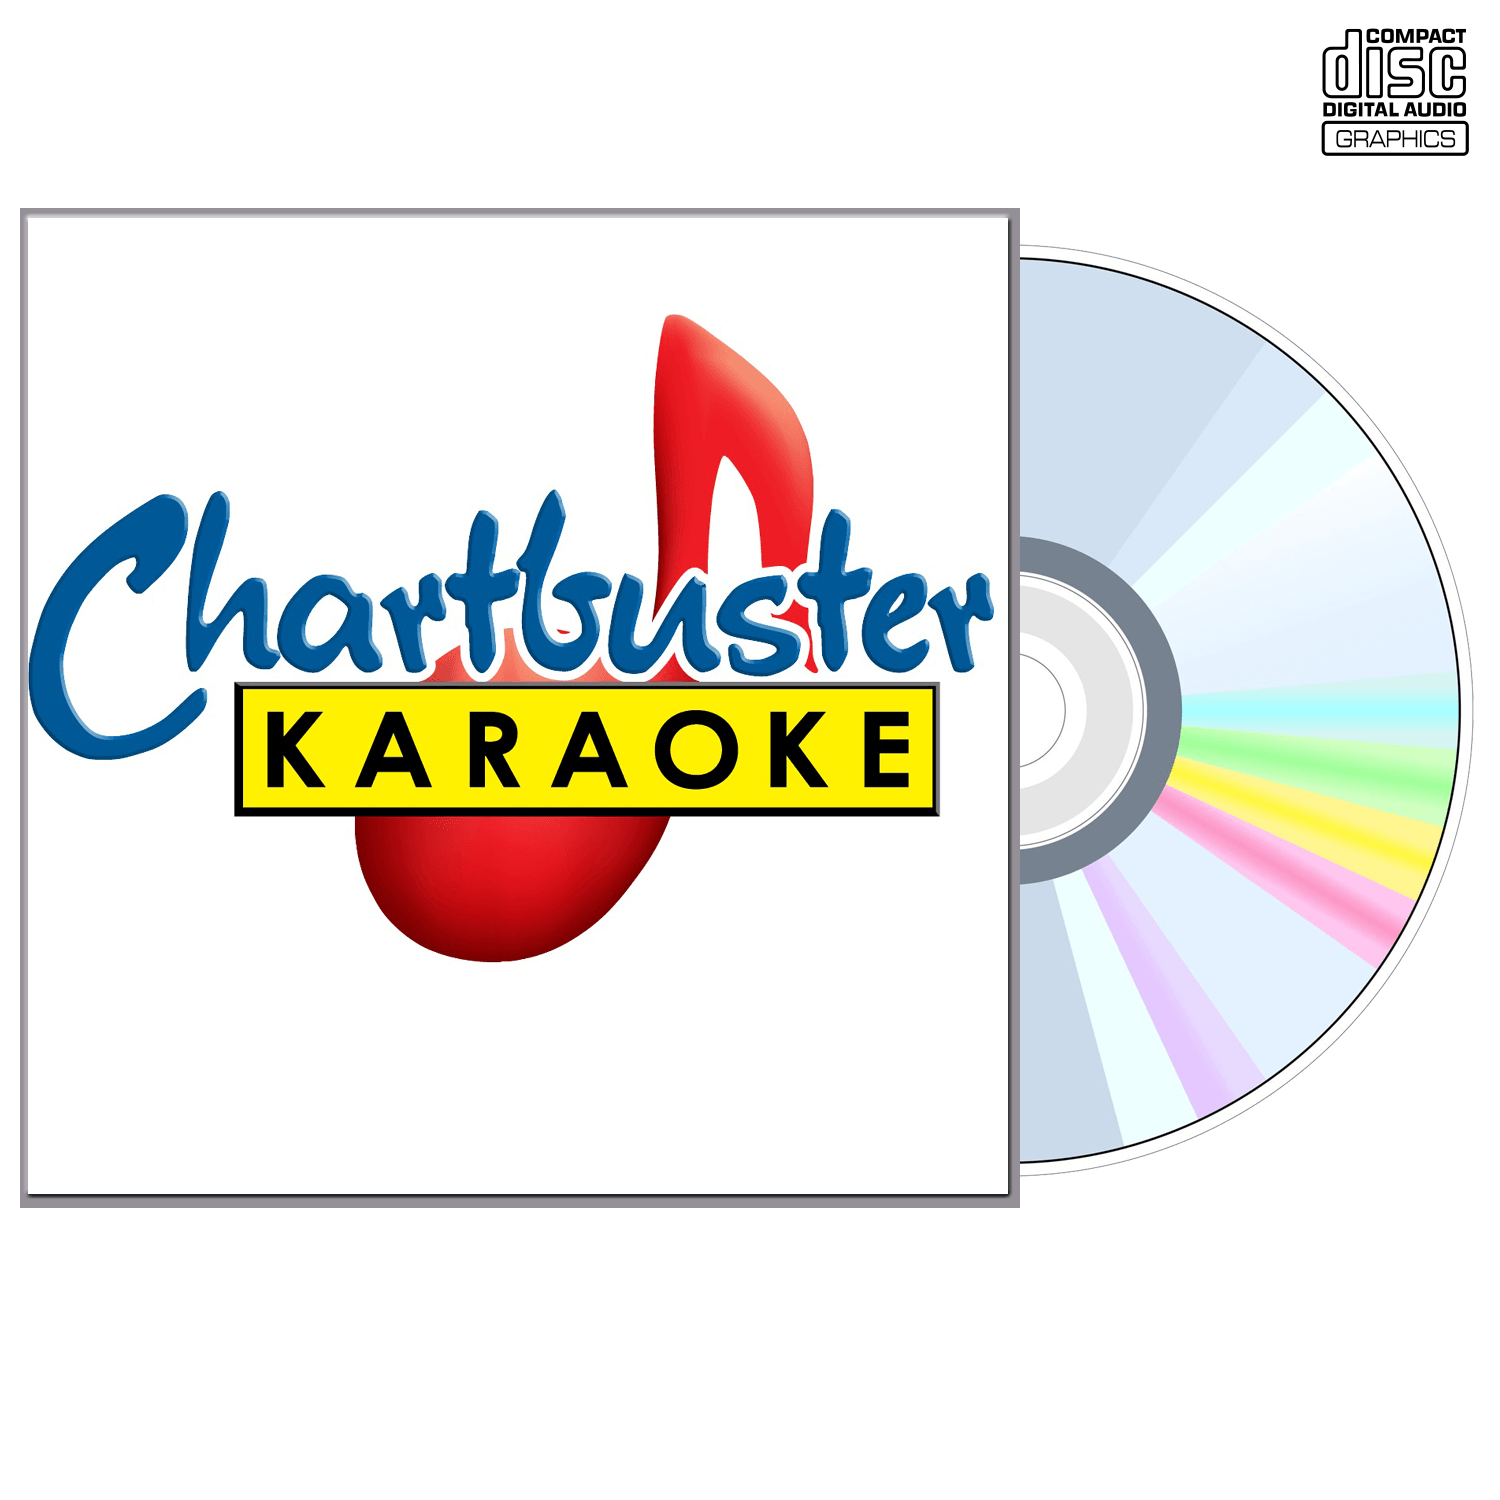 Country Mix Vol 13 - CD+G - Chartbuster Karaoke - Karaoke Home Entertainment